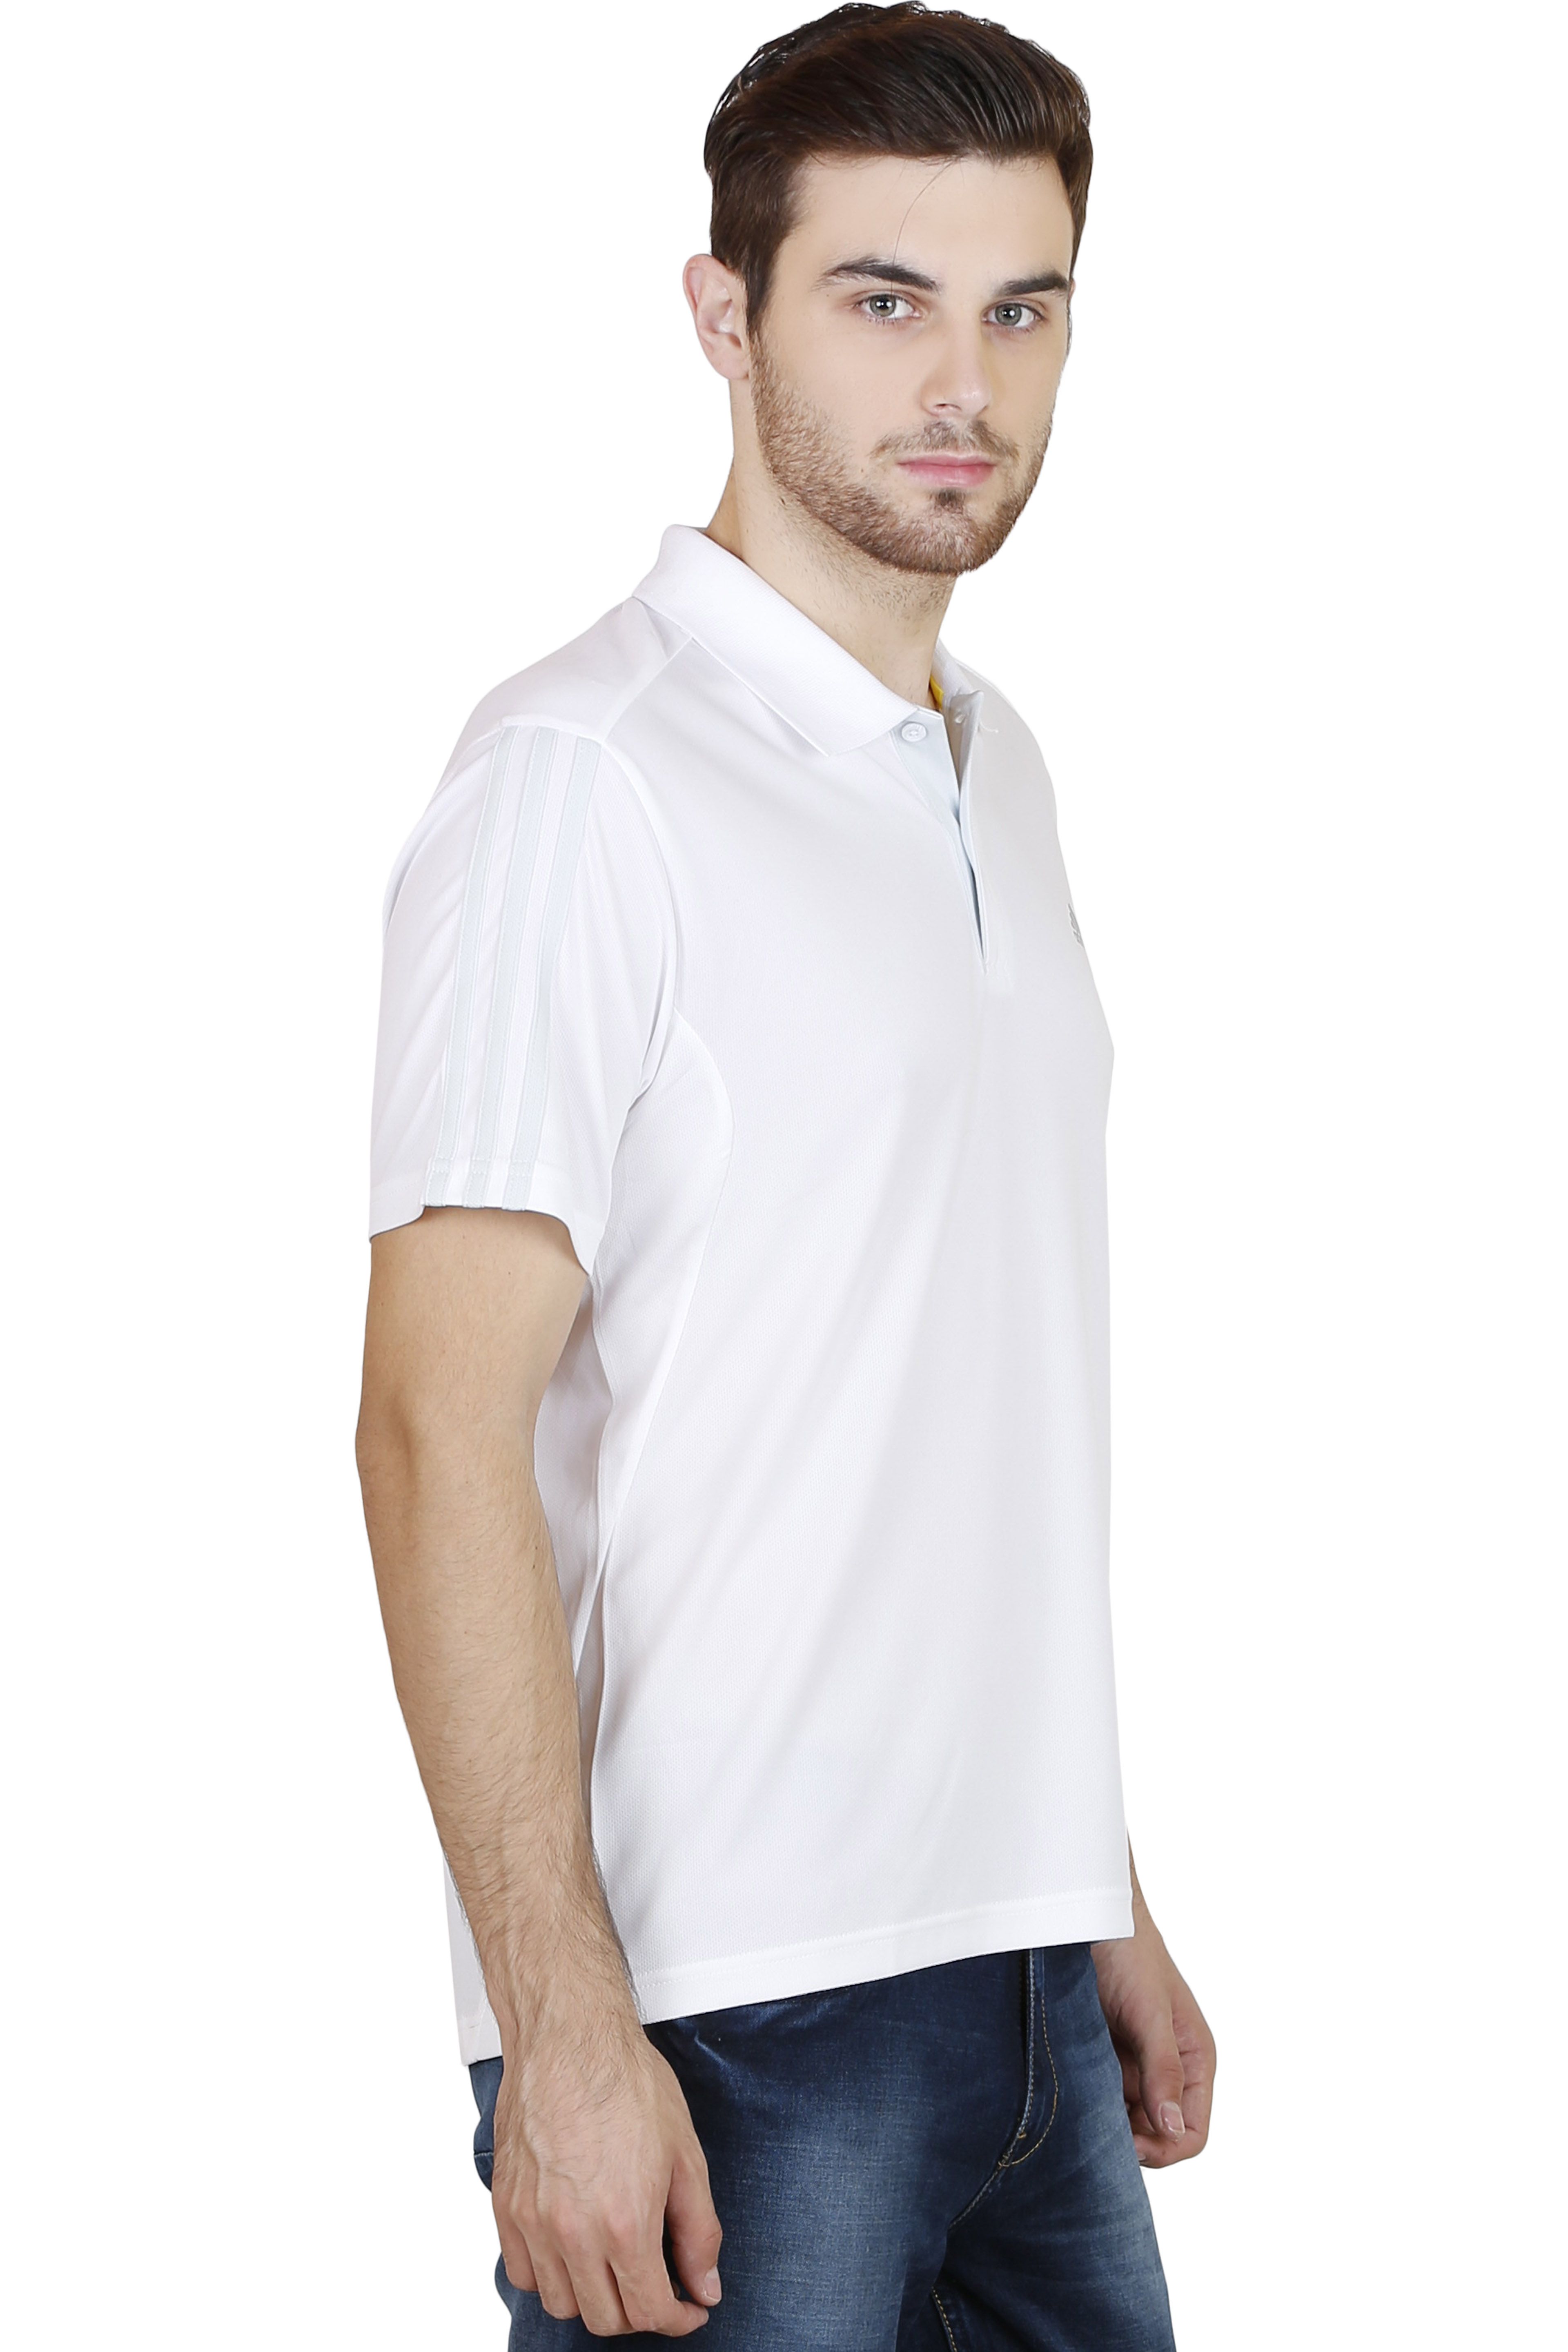 Adidas White Polo T Shirts - Buy Adidas White Polo T Shirts Online at ...